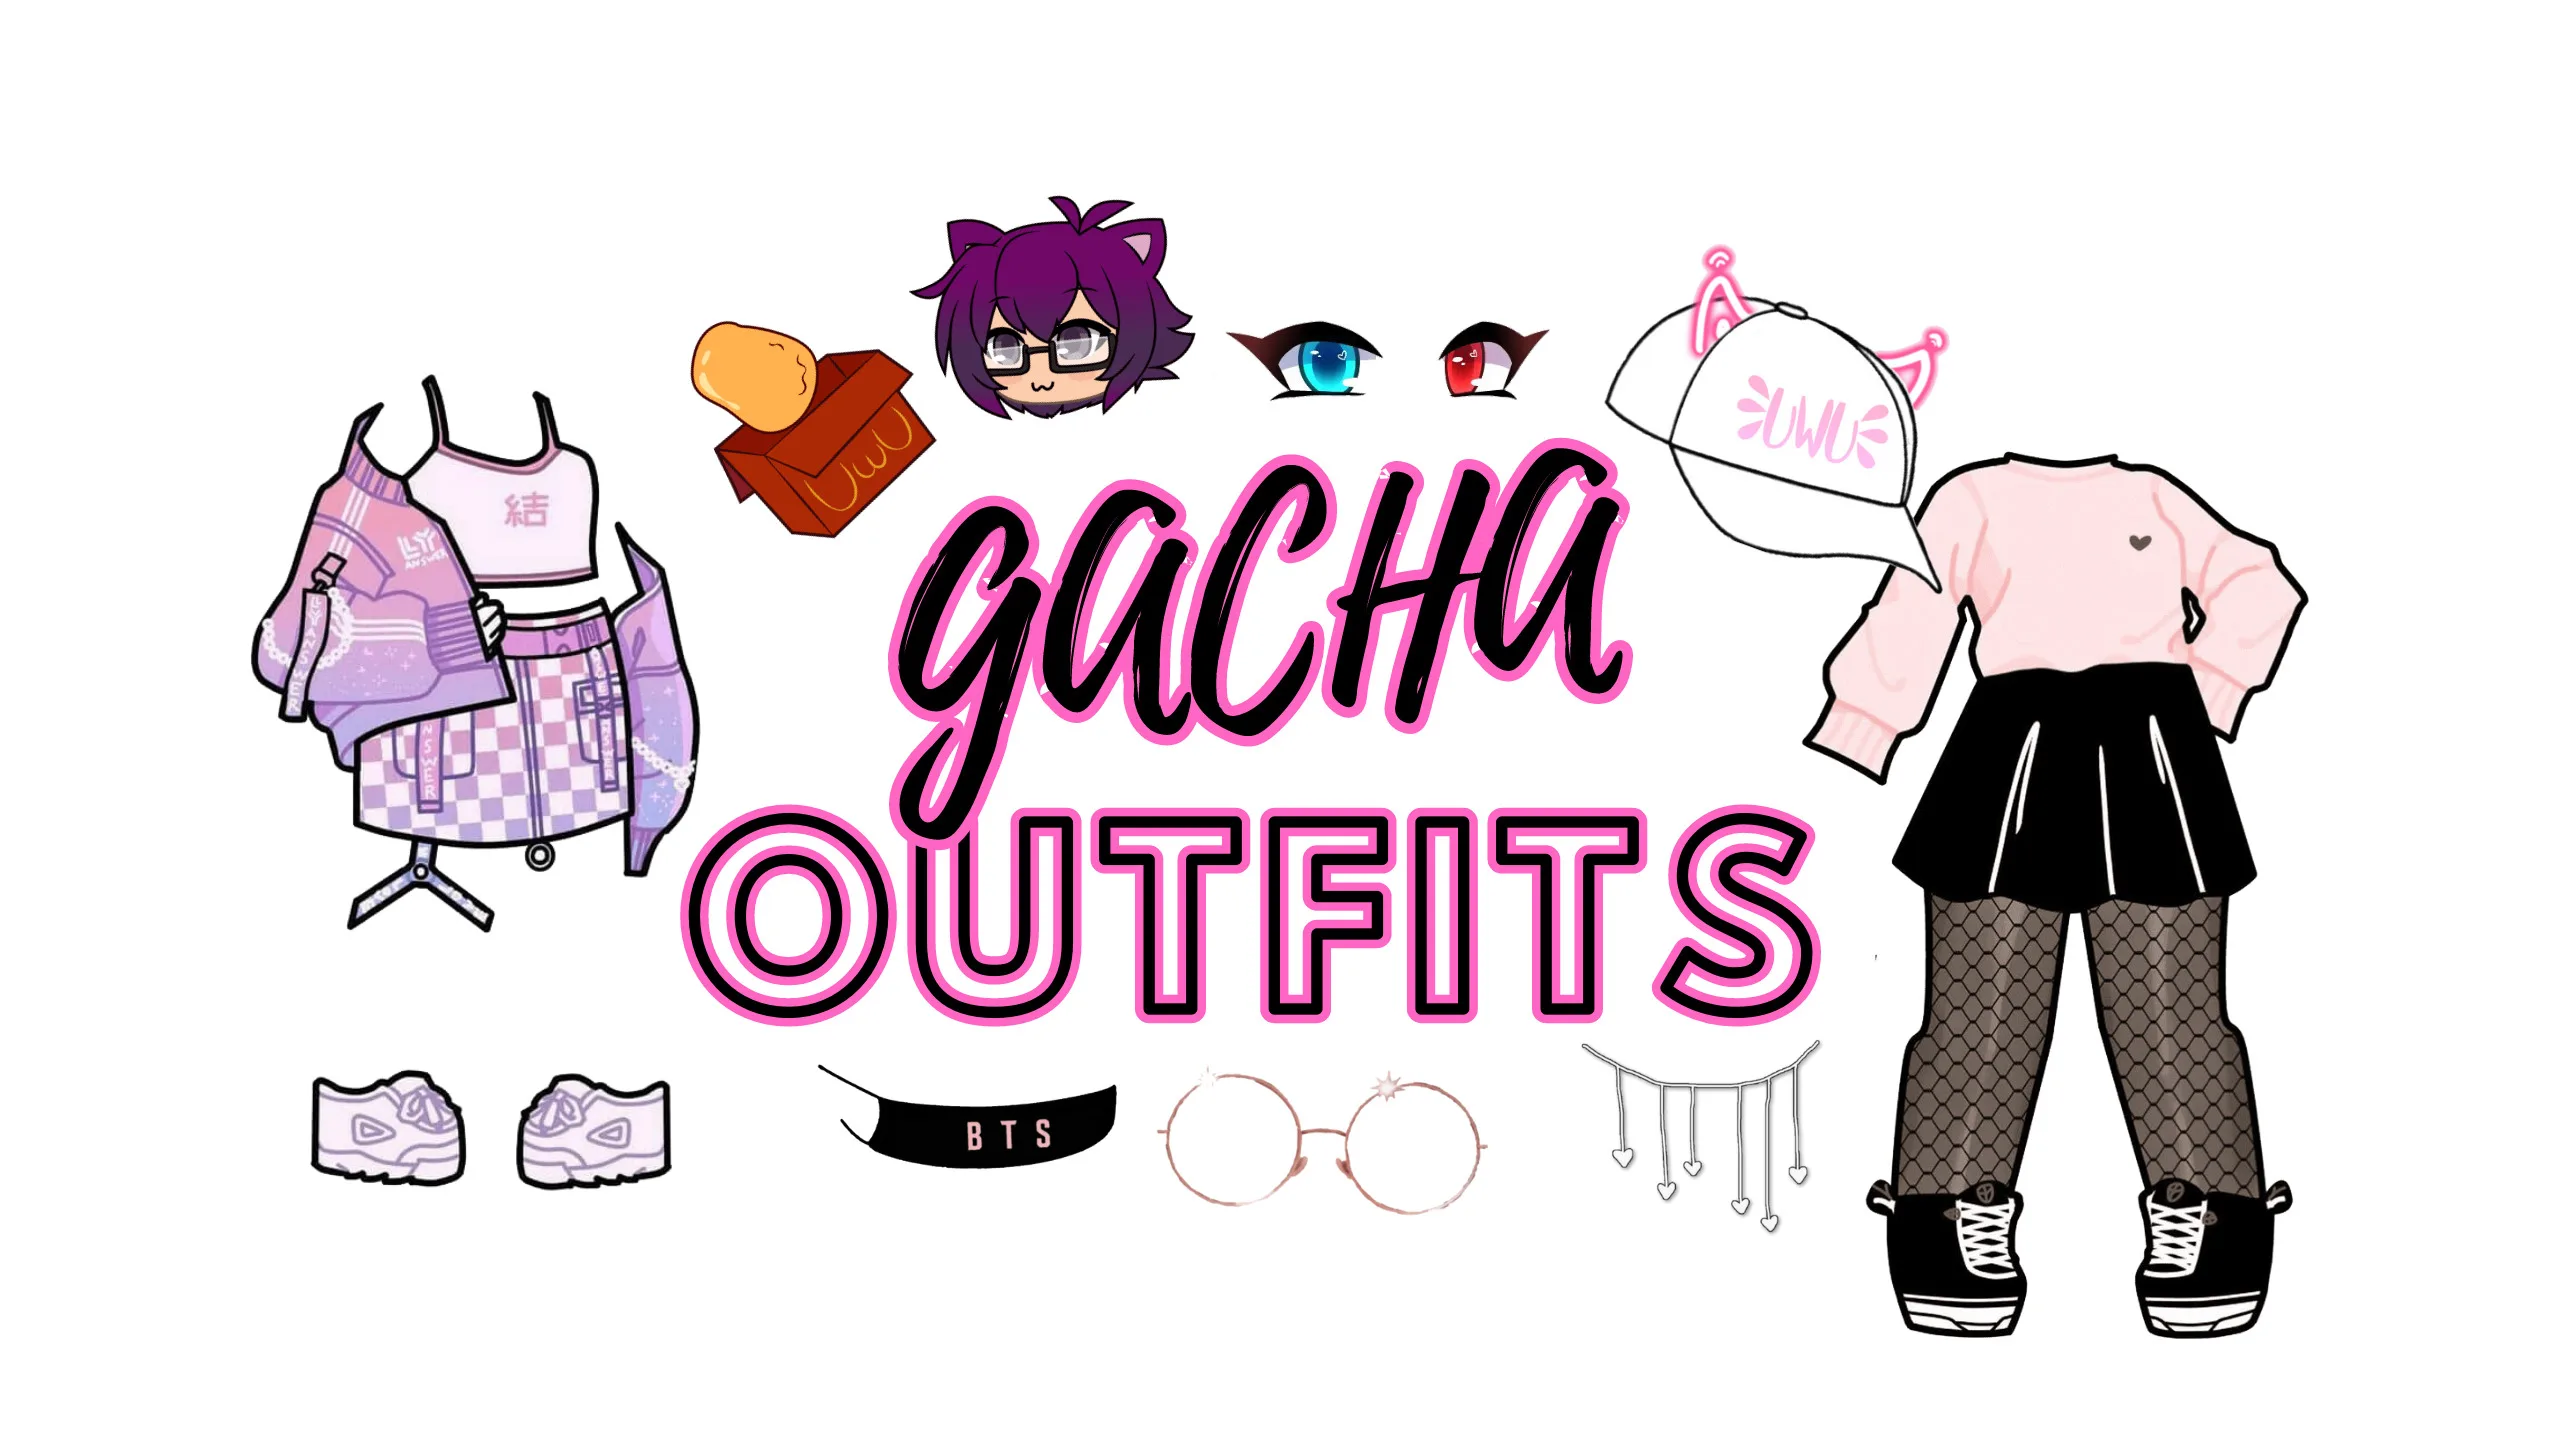 How to make Todoroki in Gacha Club - Gacha Outfits